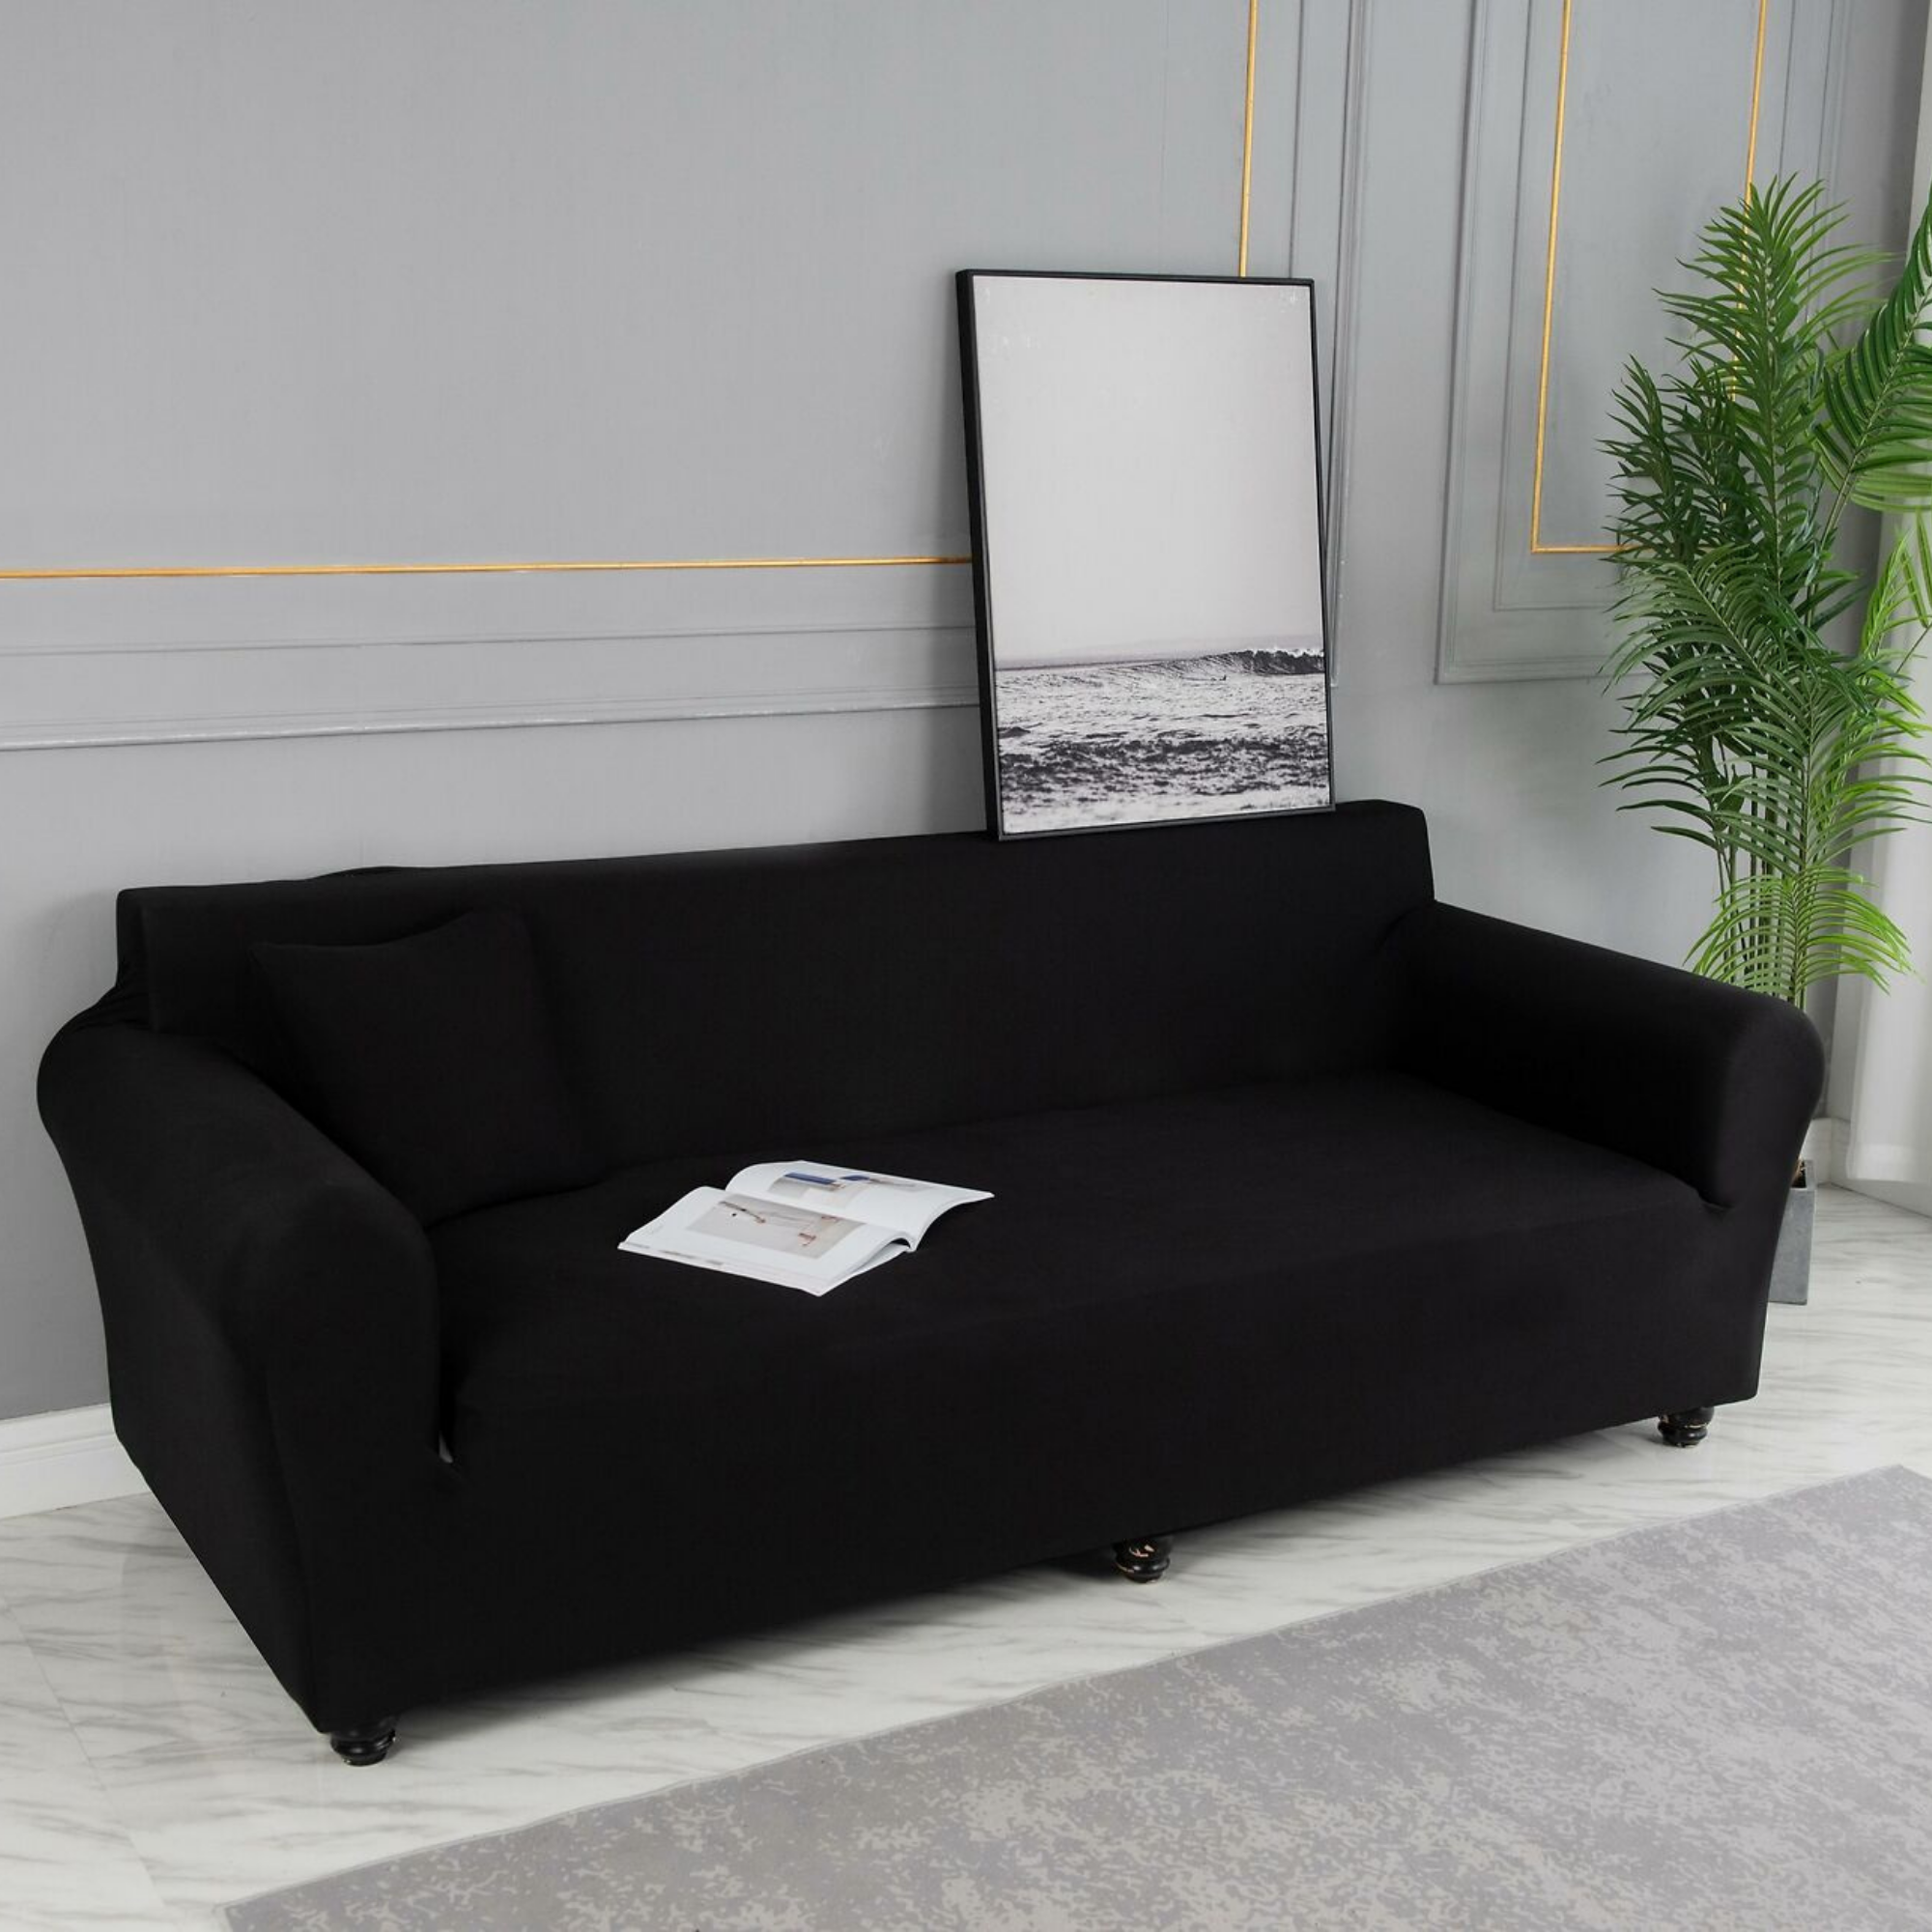 Premium Non-Slip Sofa Cover + FREE Matching Cushion Cover